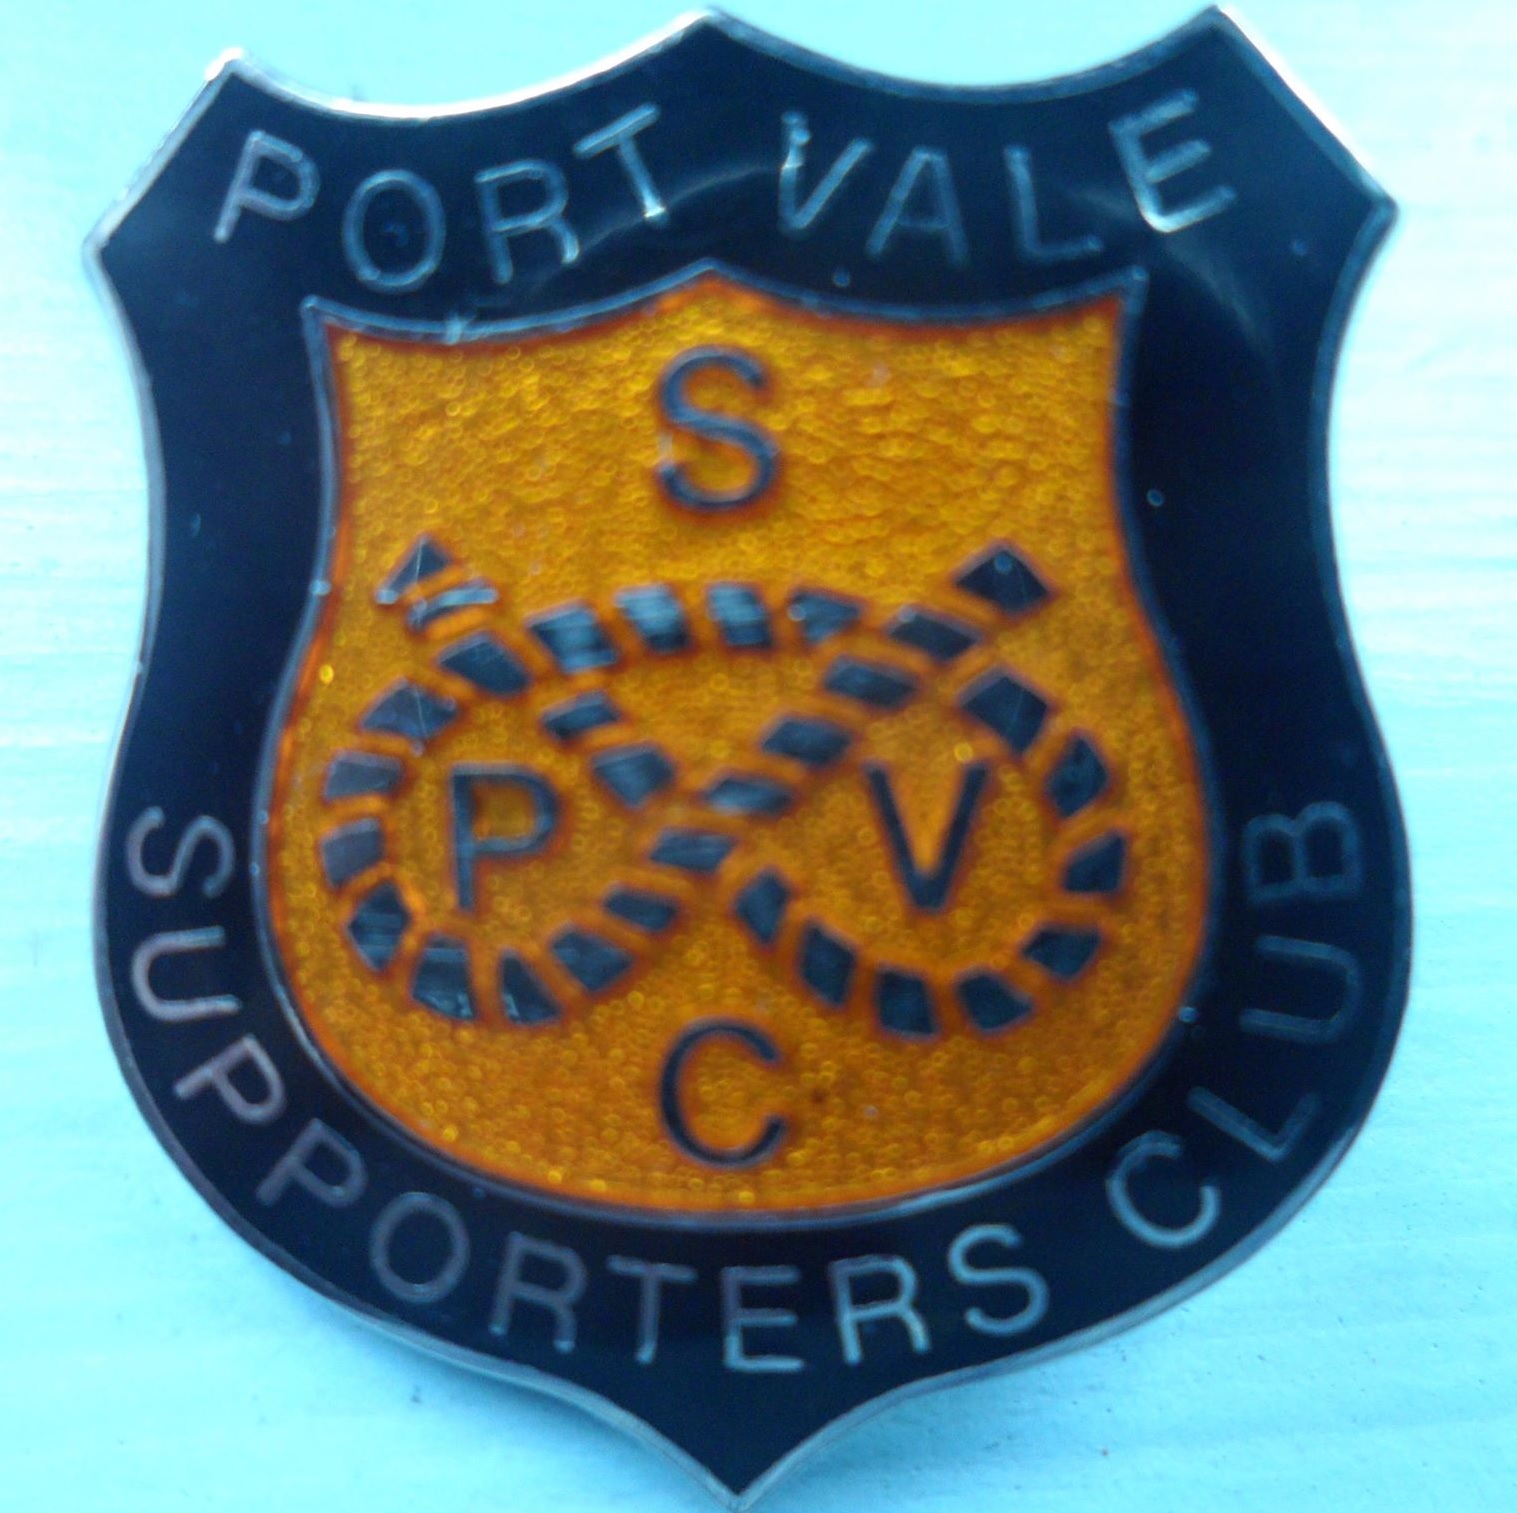 Port Vale FC history